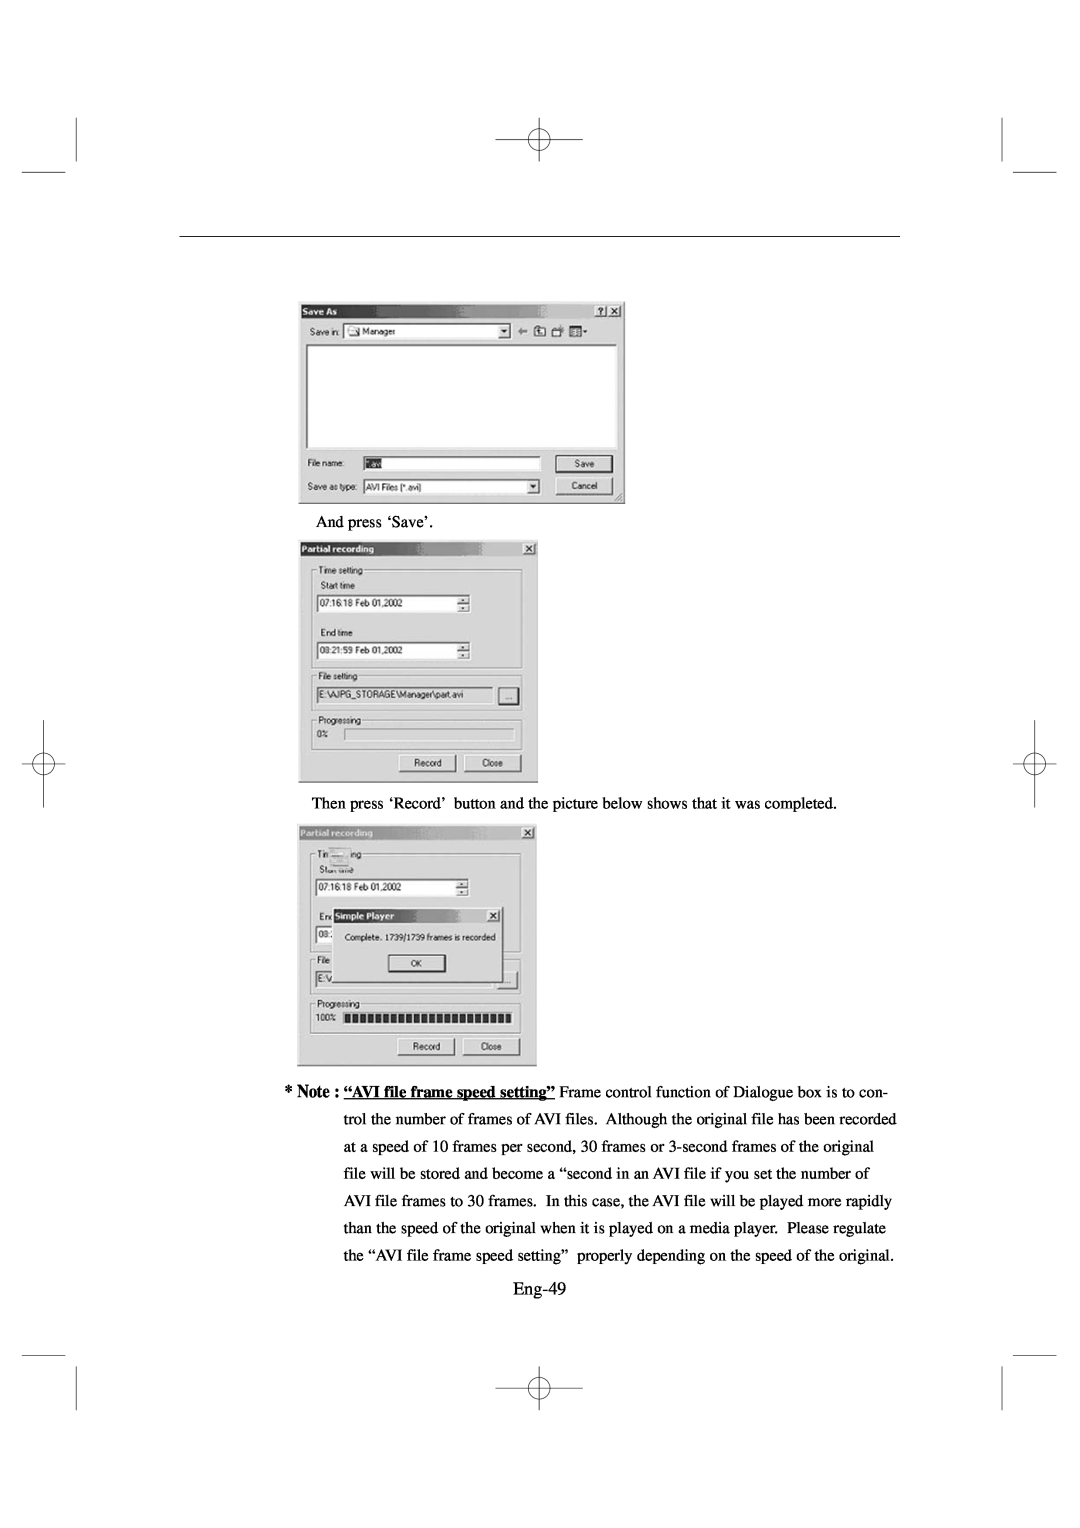 Samsung SSC17WEB manual Eng-49 